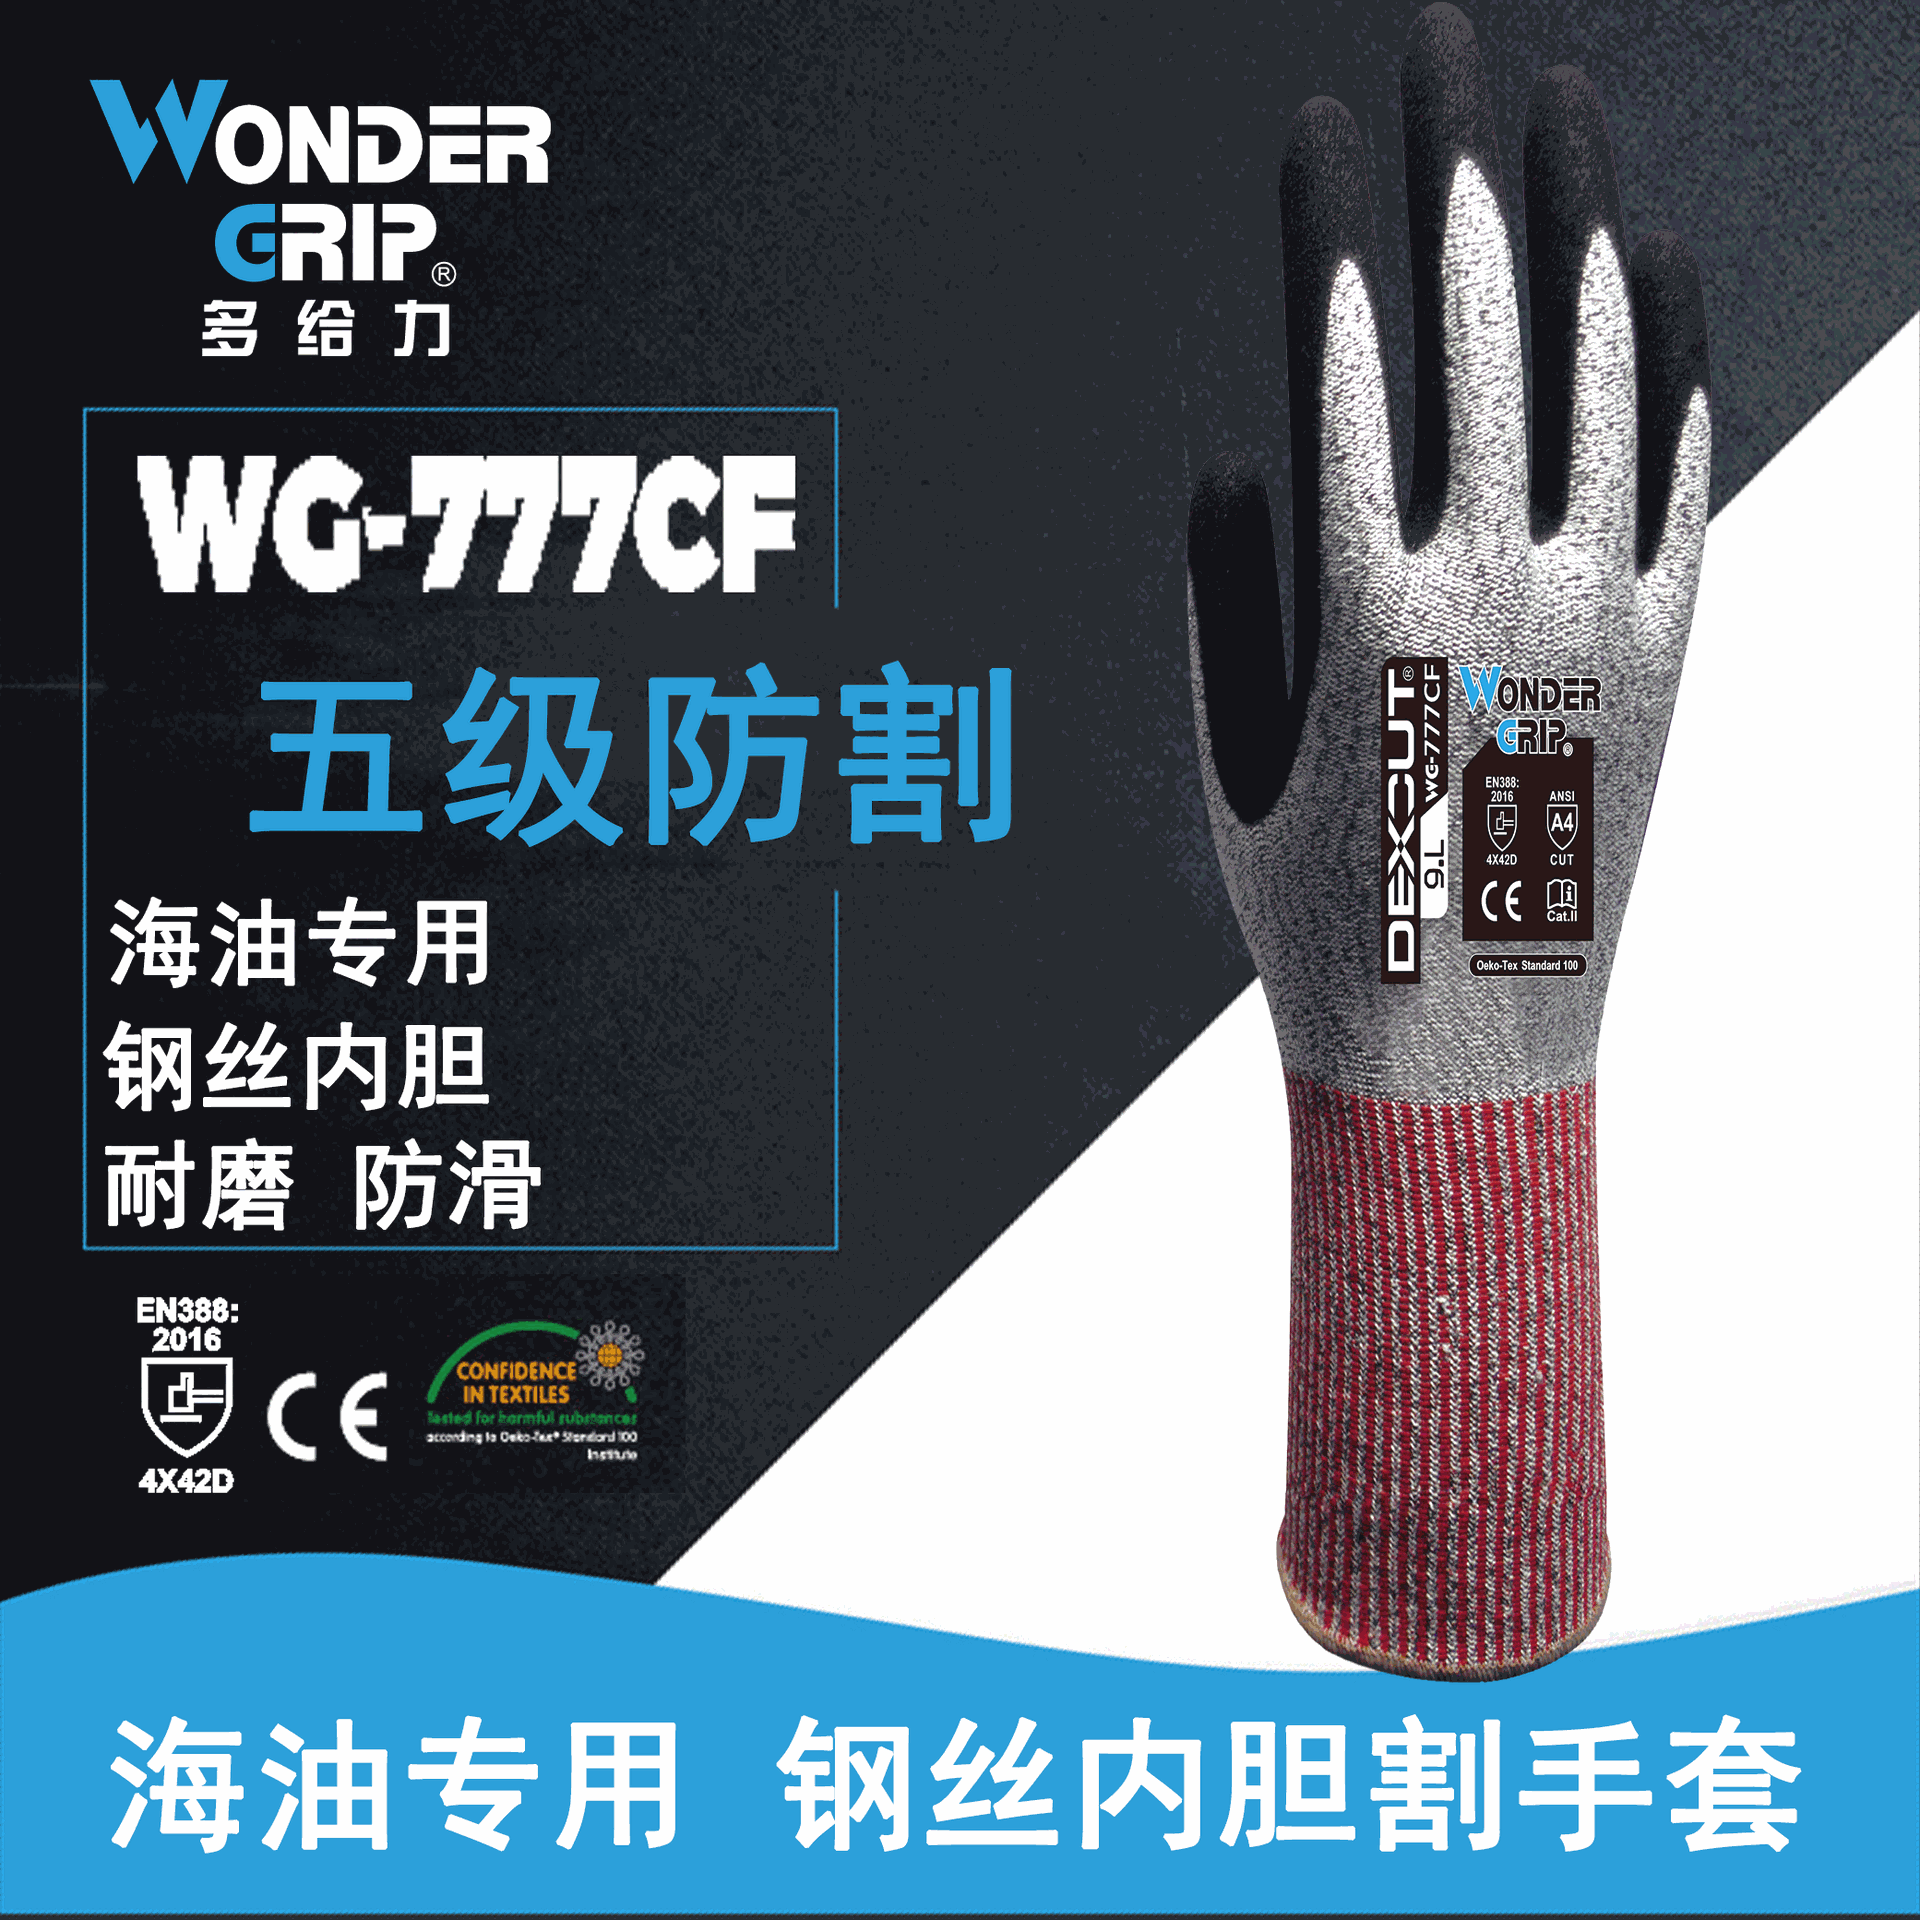 Wonder Grip/多给力WG-777CF五级防割手套/丁腈磨砂5级耐割手套